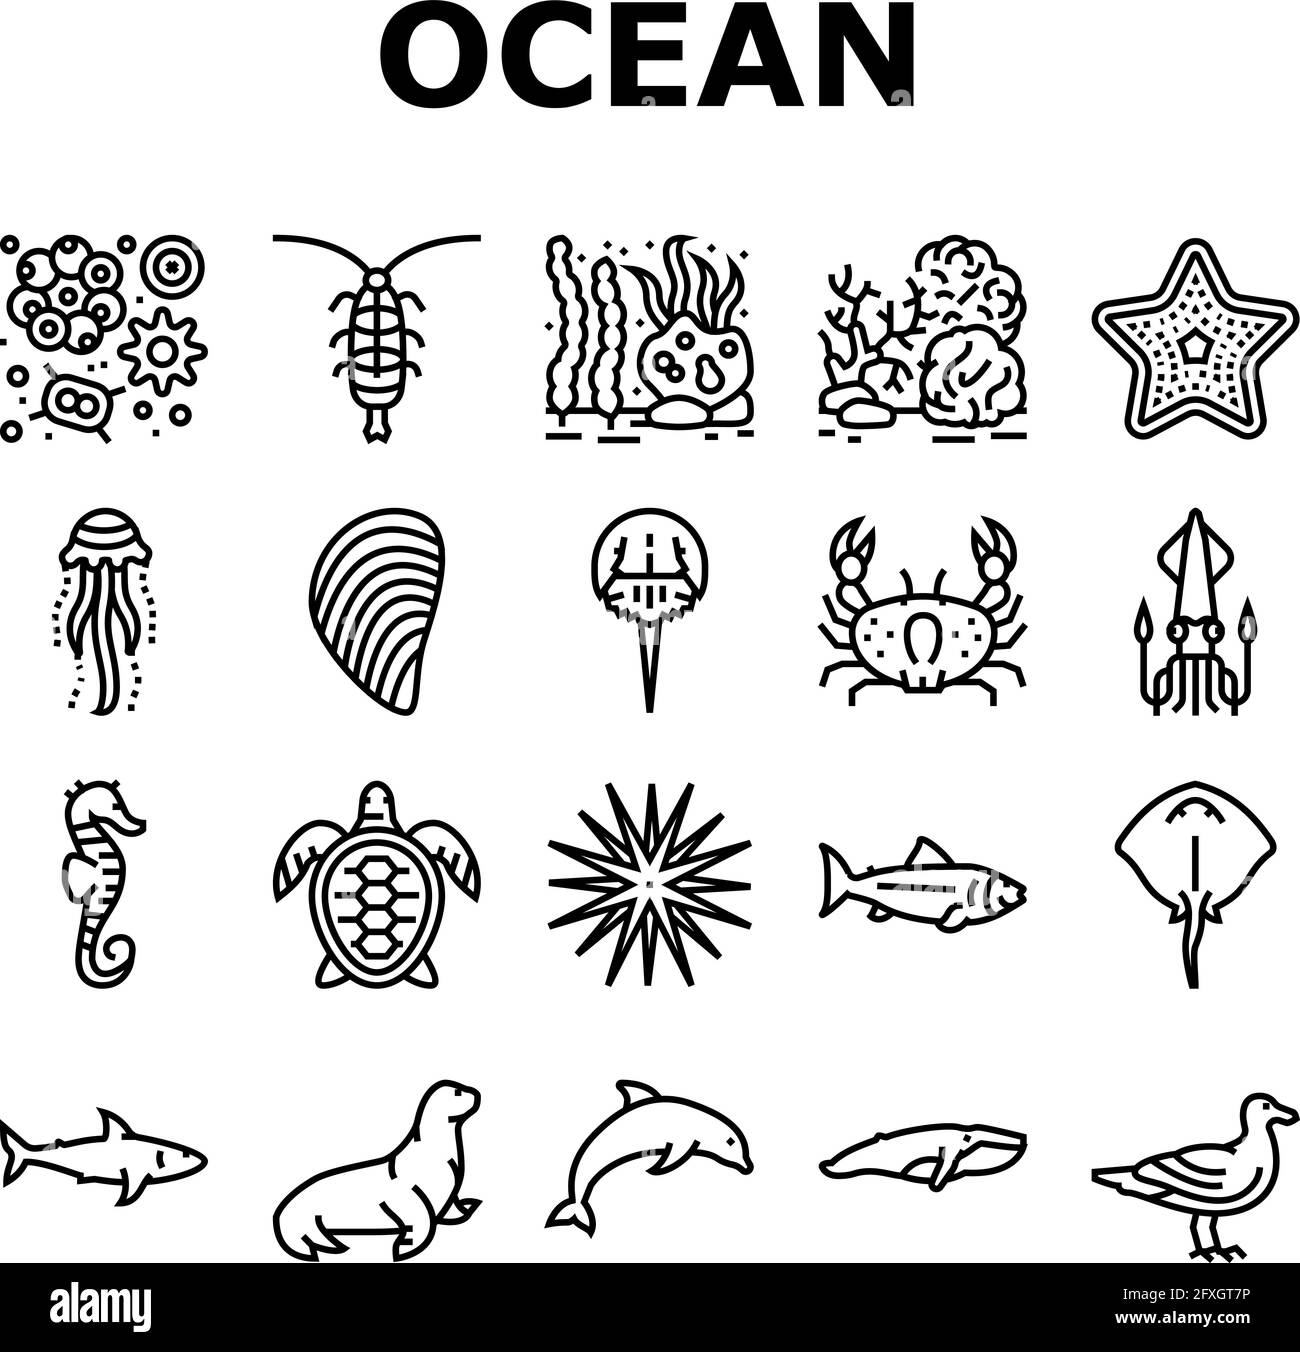 https://c8.alamy.com/comp/2FXGT7P/ocean-underwater-life-collection-icons-set-vector-2FXGT7P.jpg